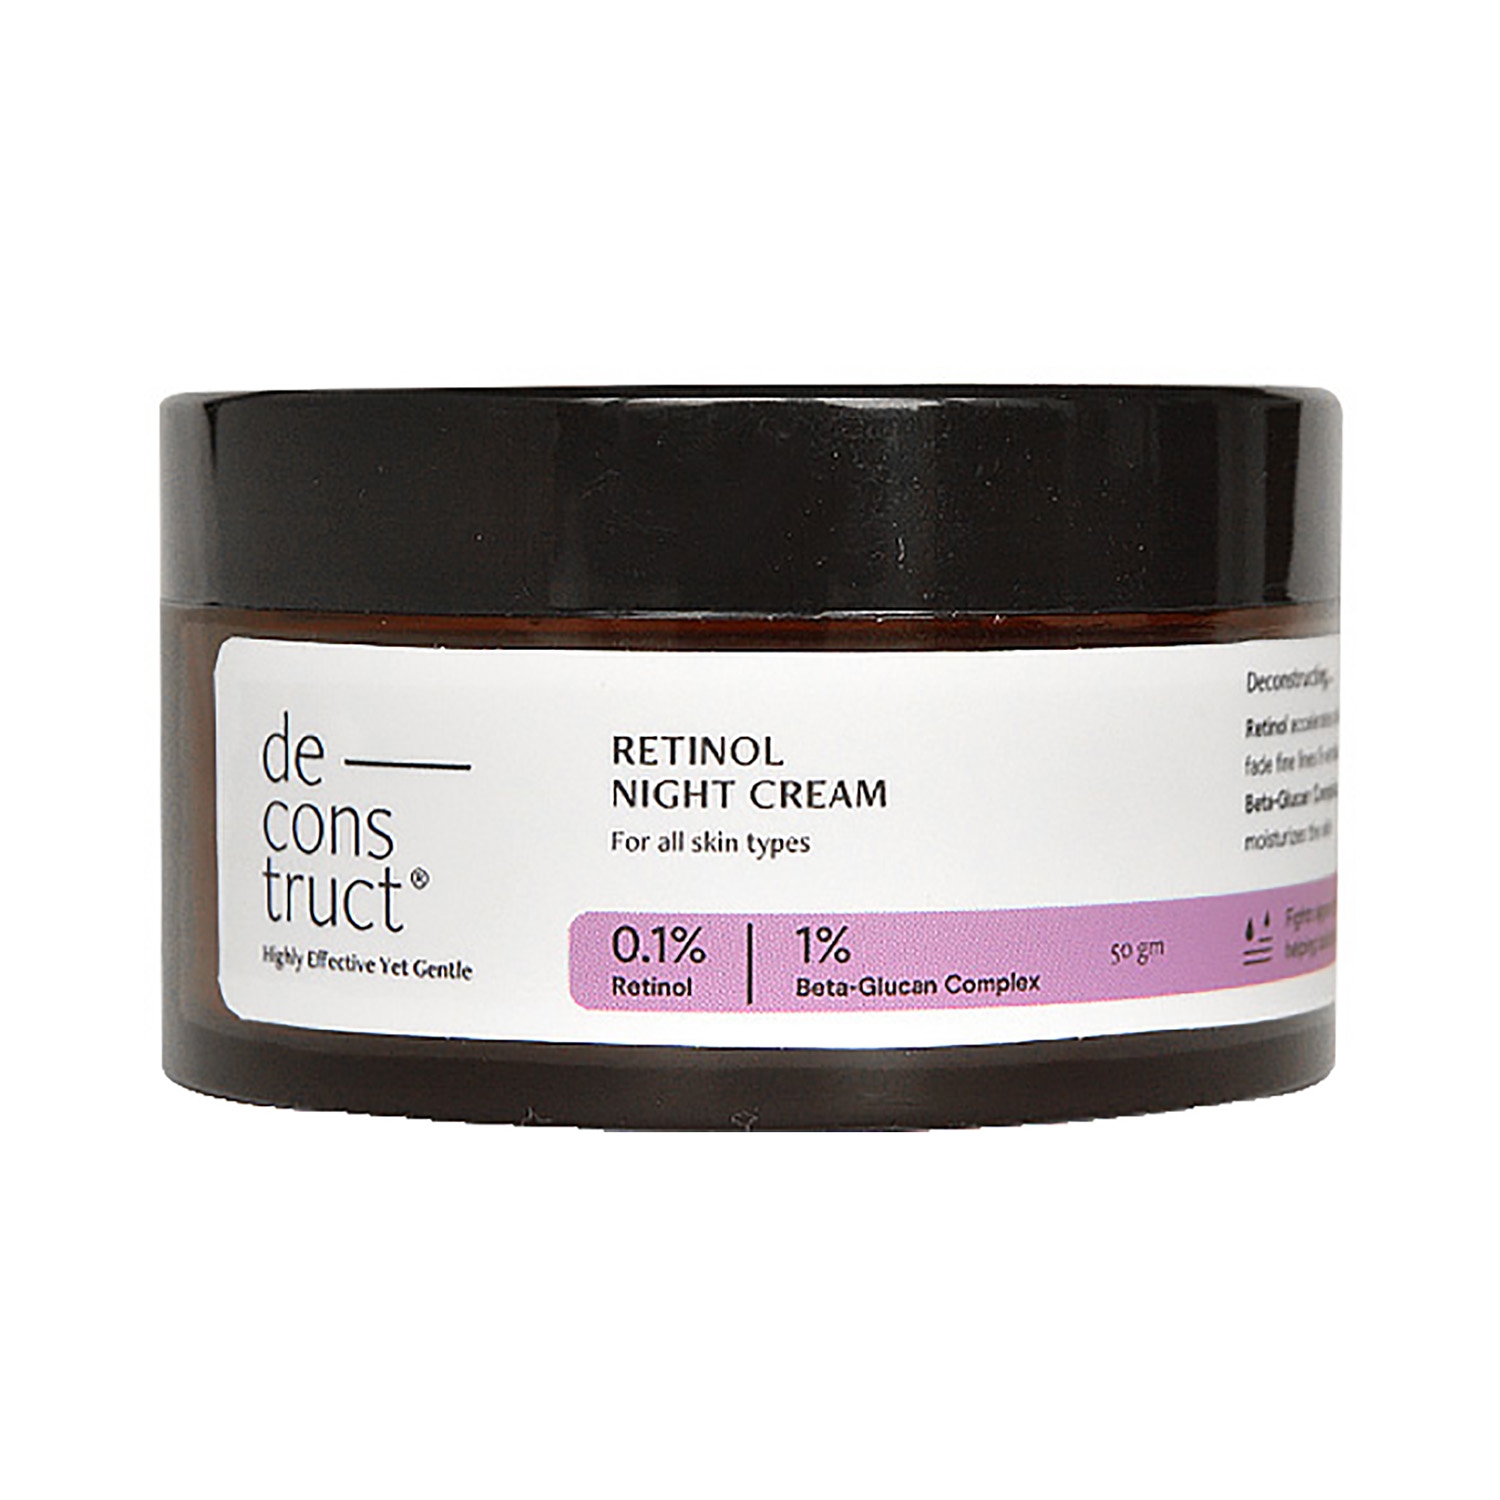 Deconstruct | Deconstruct Retinol Night cream - 0.1% Retinol + 1% Beta-Glucan Complex (50g)